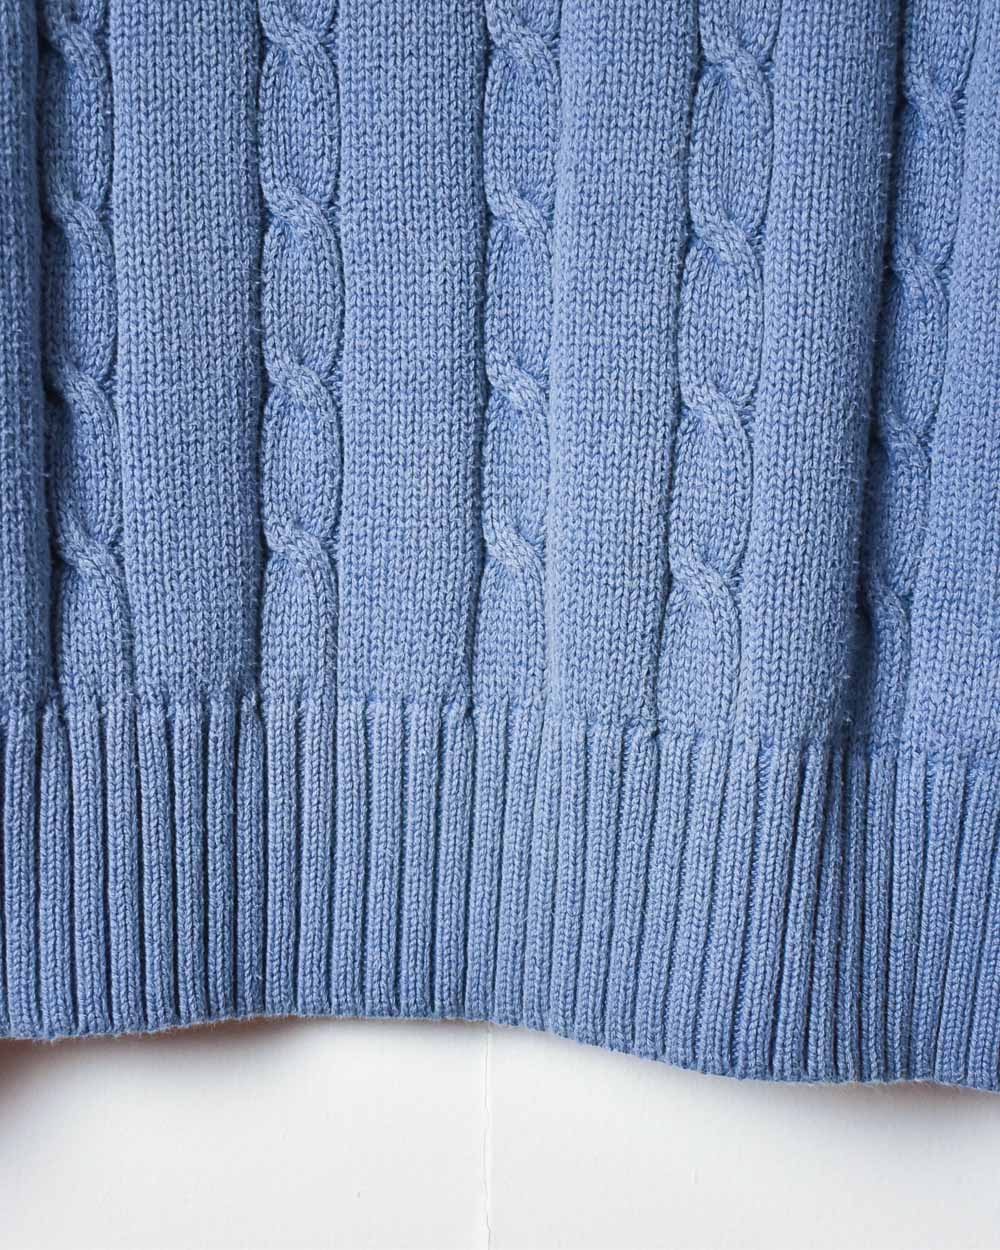 Blue Tommy Hilfiger Cable Knit Sweatshirt - Medium